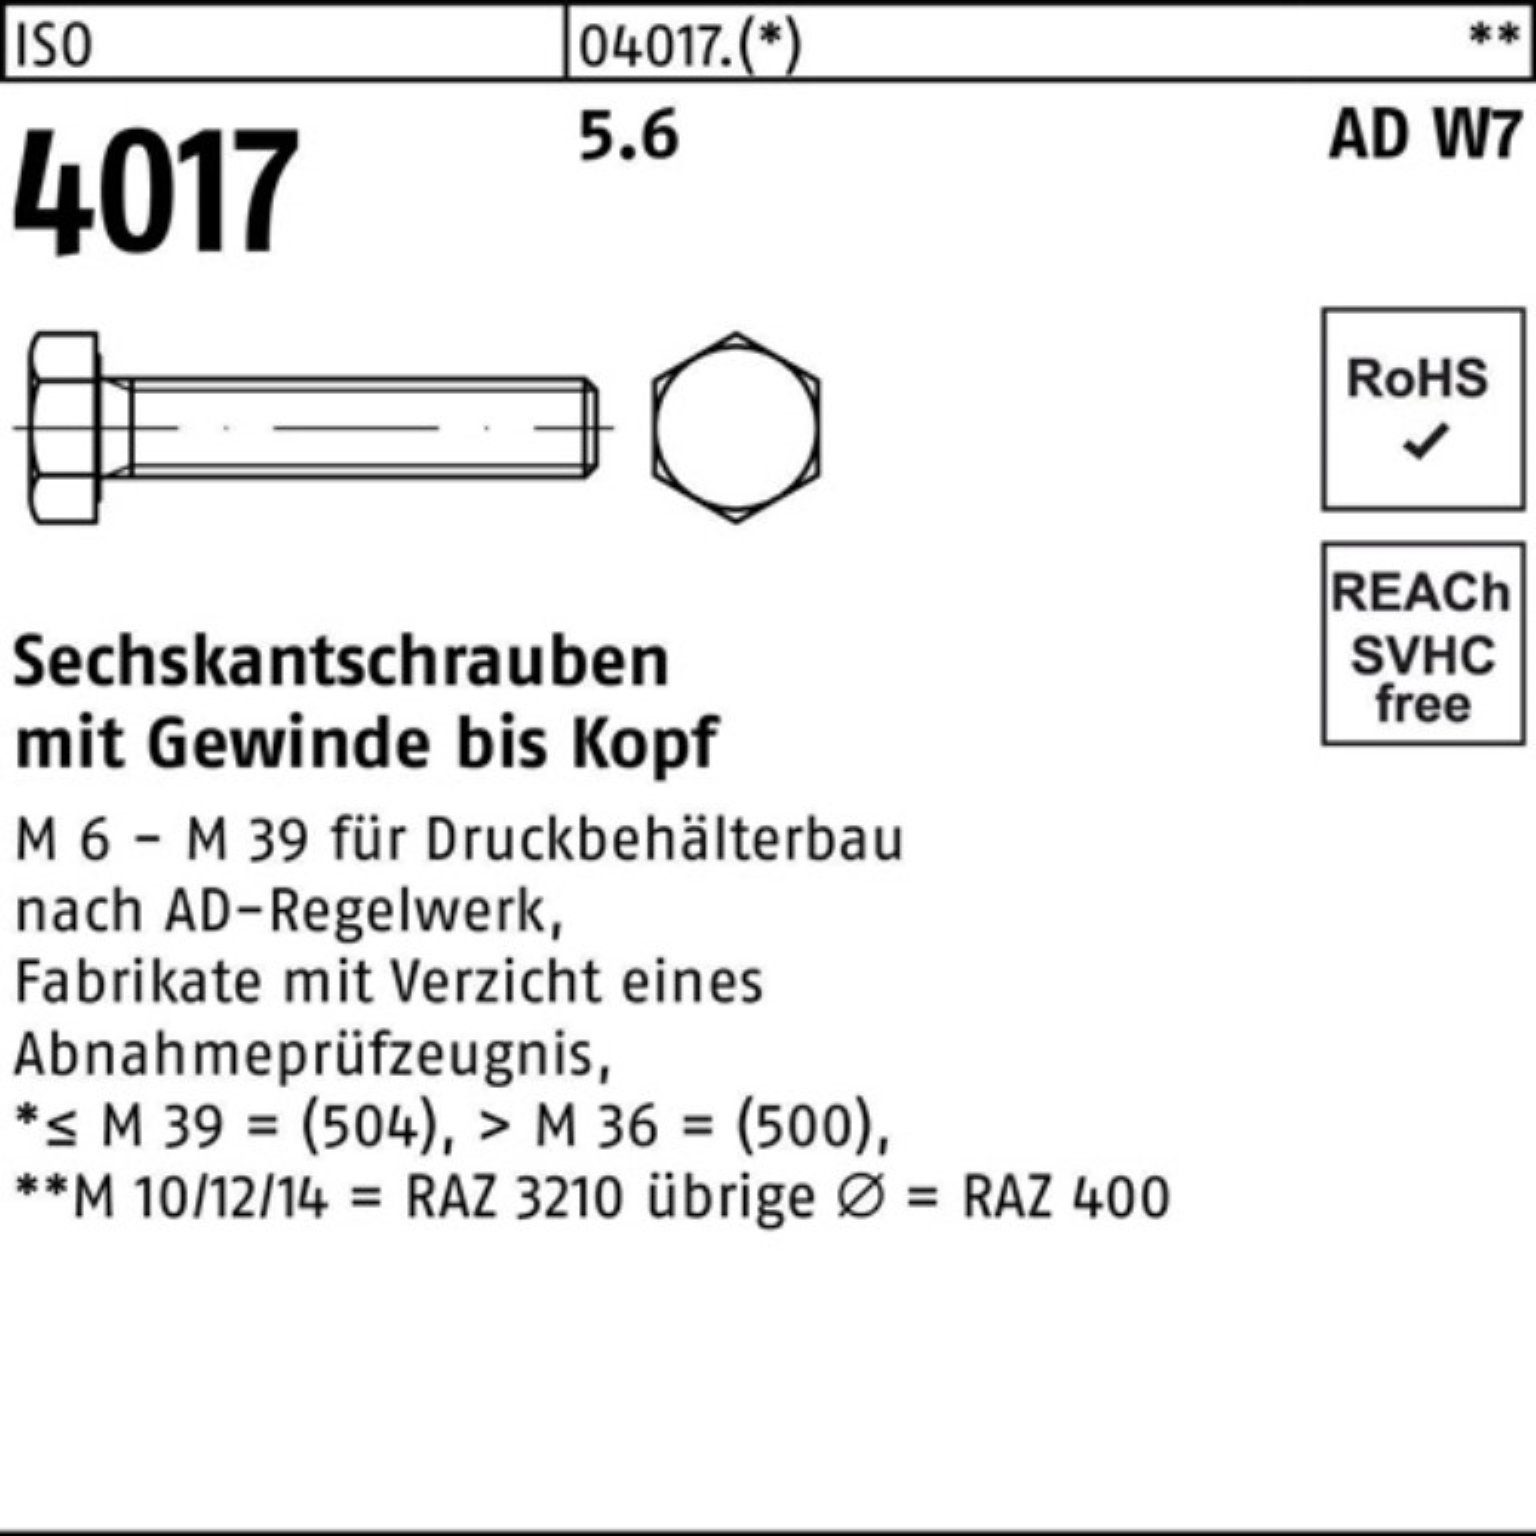 Bufab Sechskantschraube 100er Sechskantschraube 90 5.6 ISO 4017 VG W7 1 Stück M33x Pack AD IS